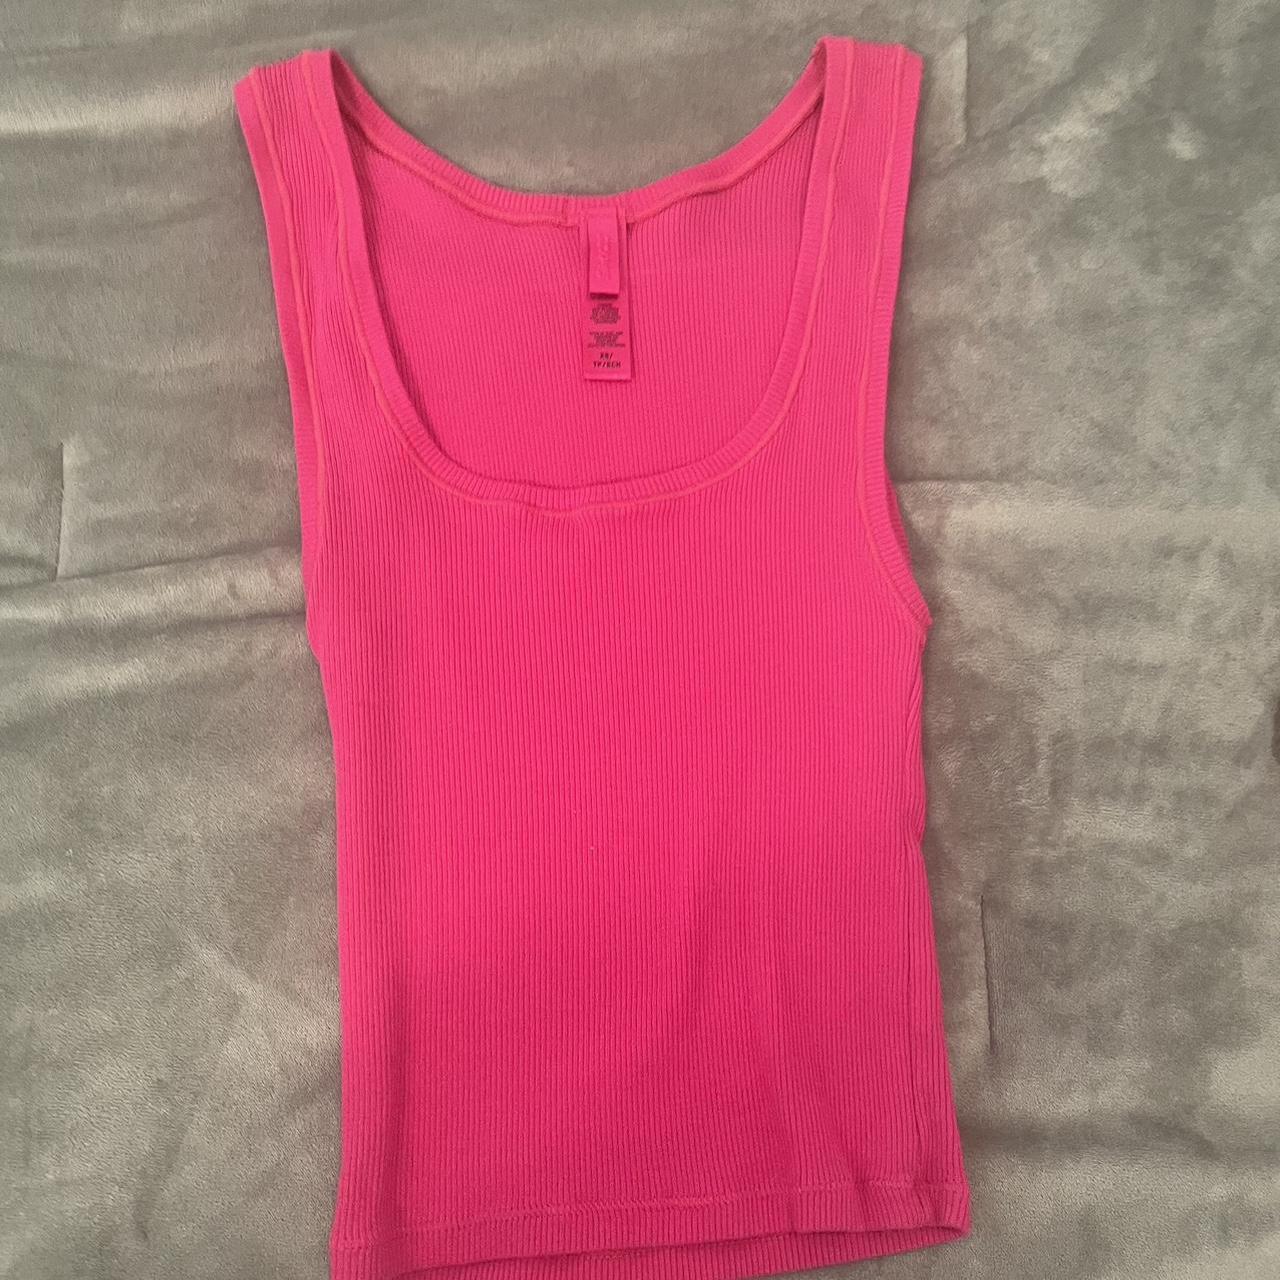 Skims Women's Pink Vest | Depop